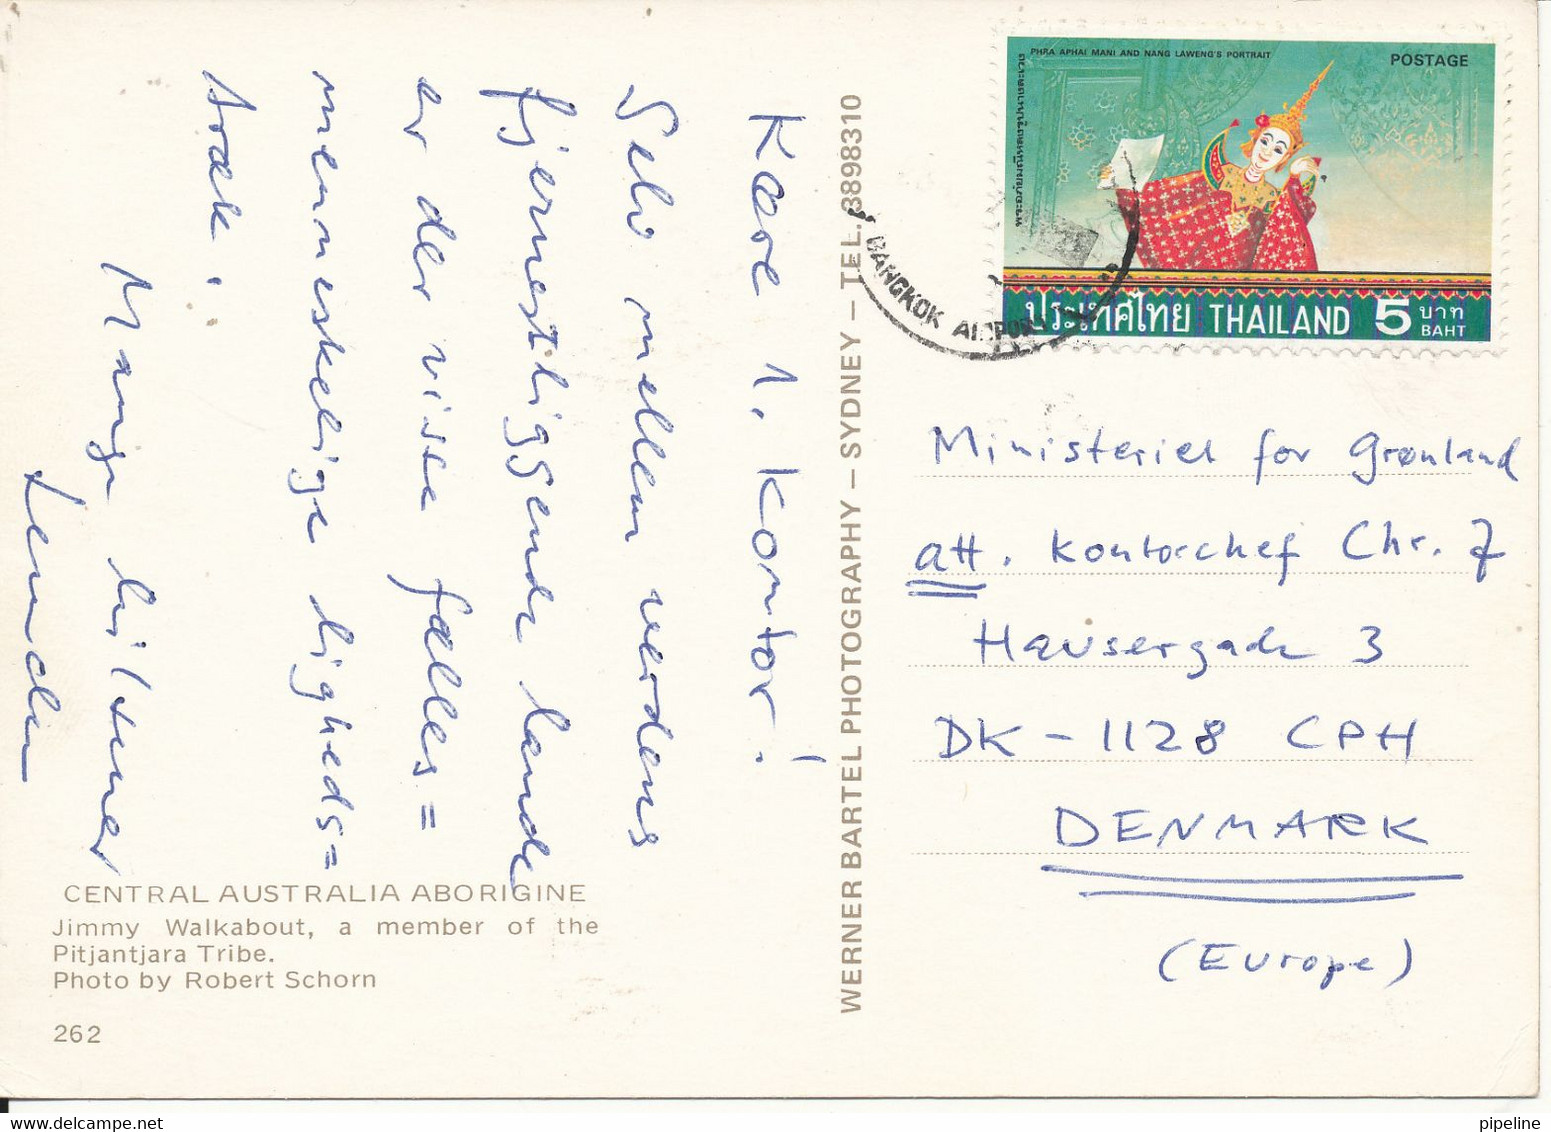 Australian Postcard Sent To Denmark With Thailand Stamp (Central Australia Aborigine) - Aborigeni